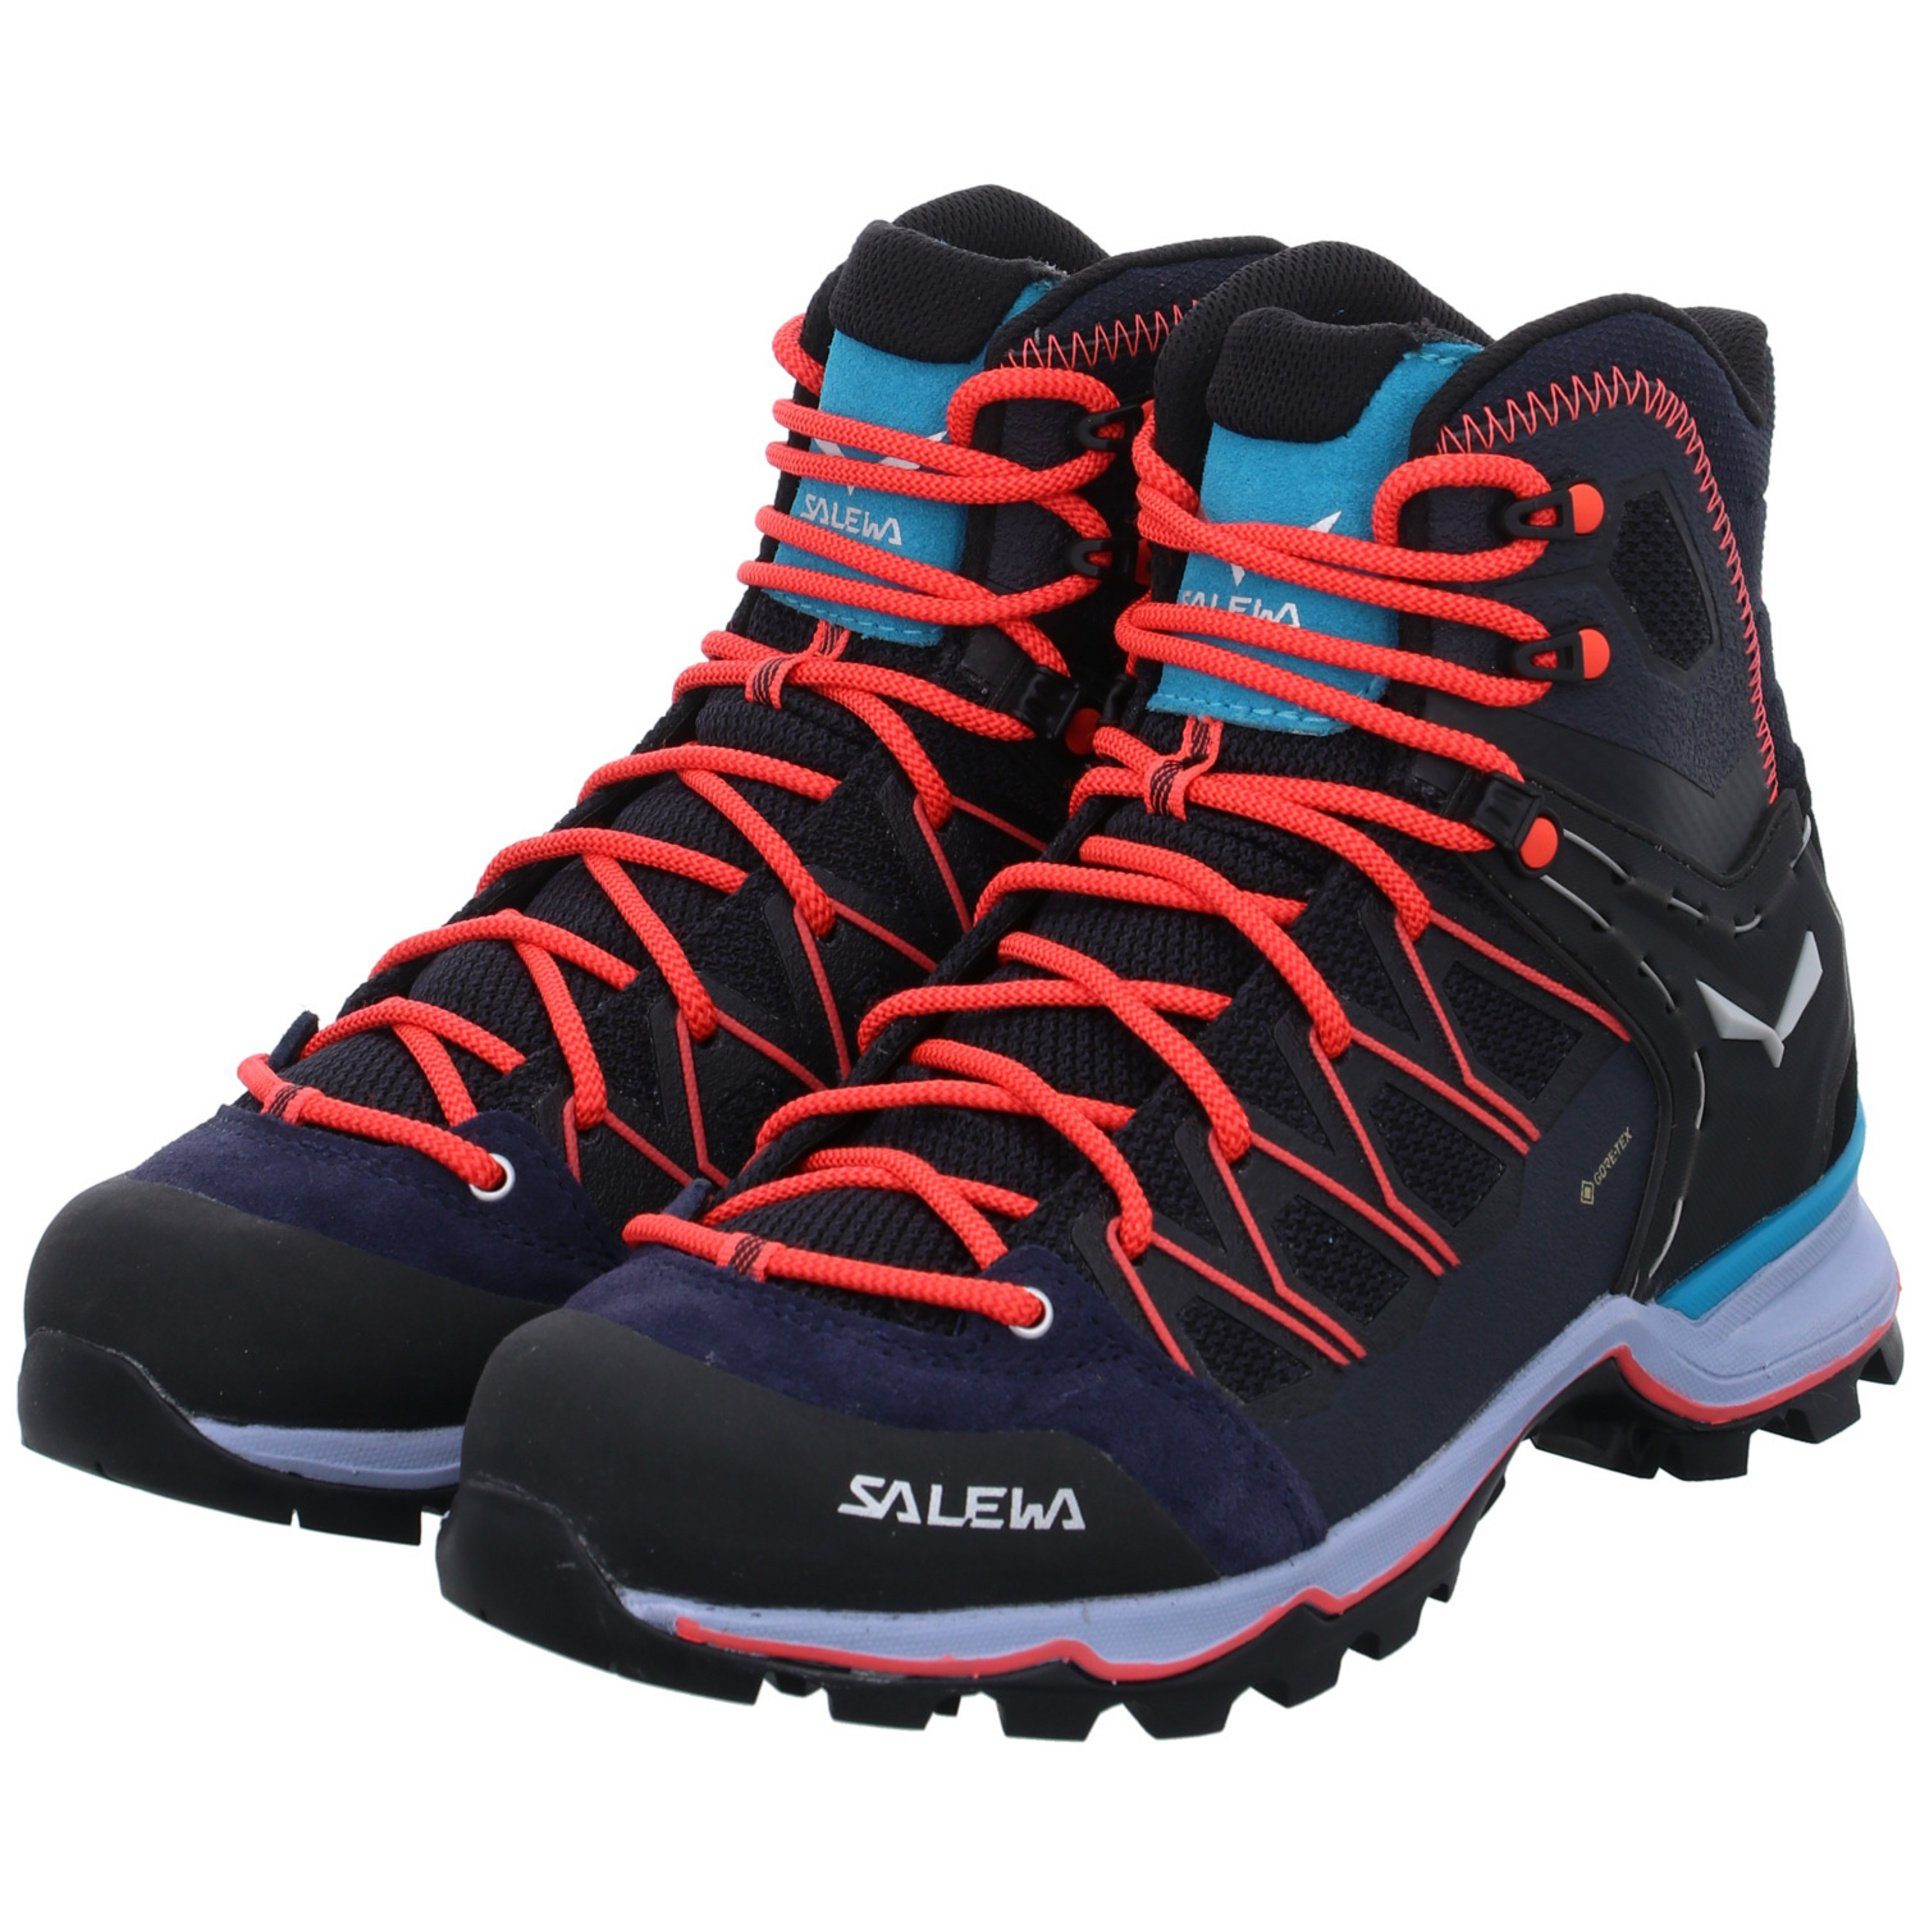 Salewa Damen Schuhe Navy/Blue 3989 Premium Fog Outdoor Leder-/Textilkombination Outdoorschuh